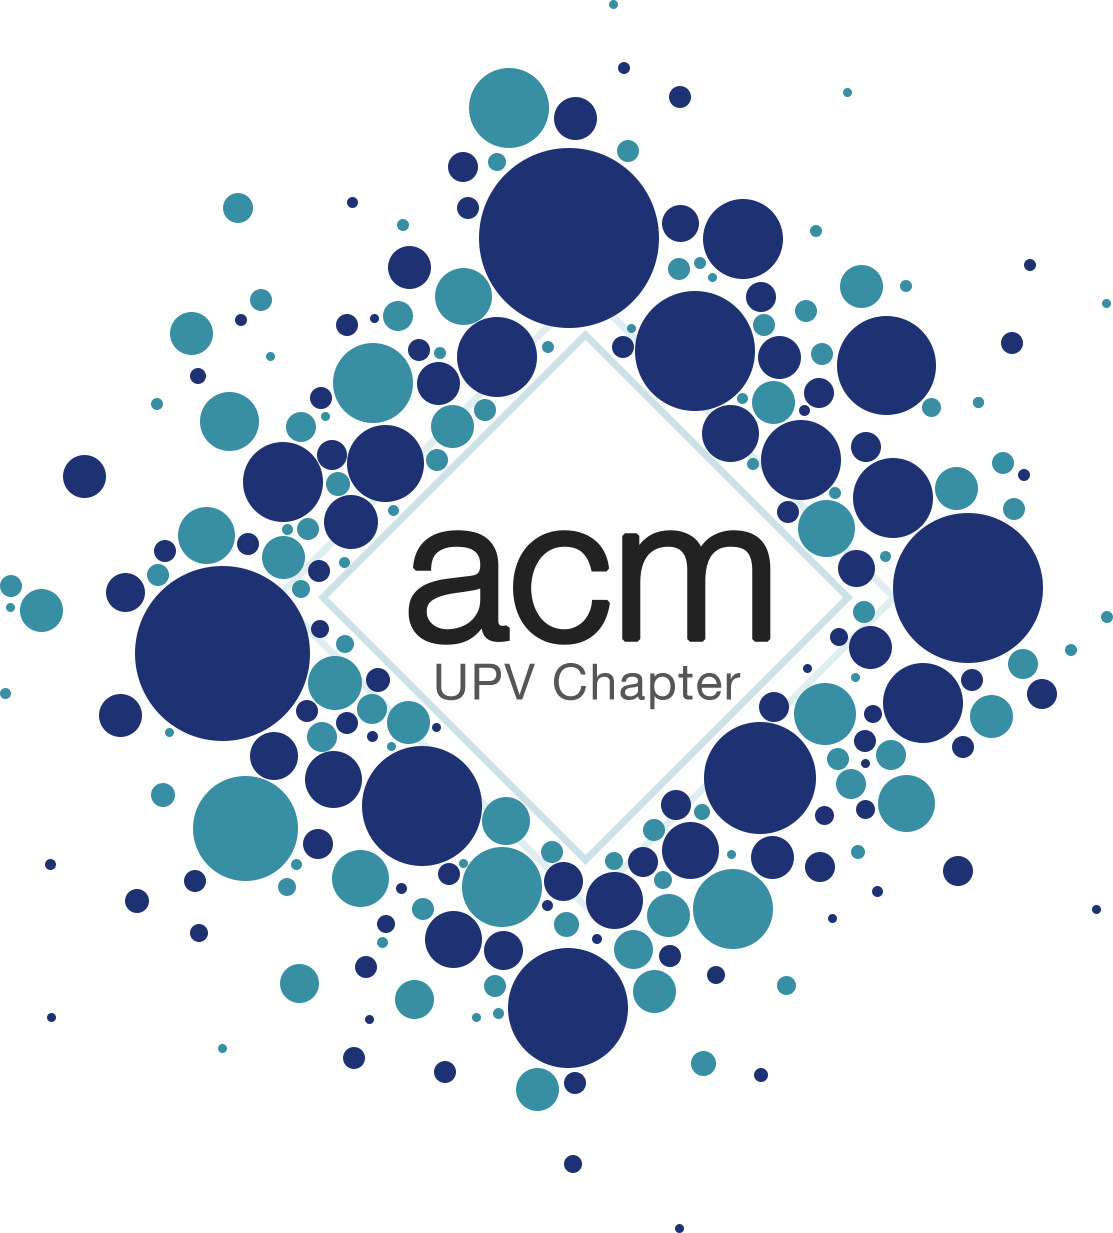 Logotip de ACM UPC Chapter